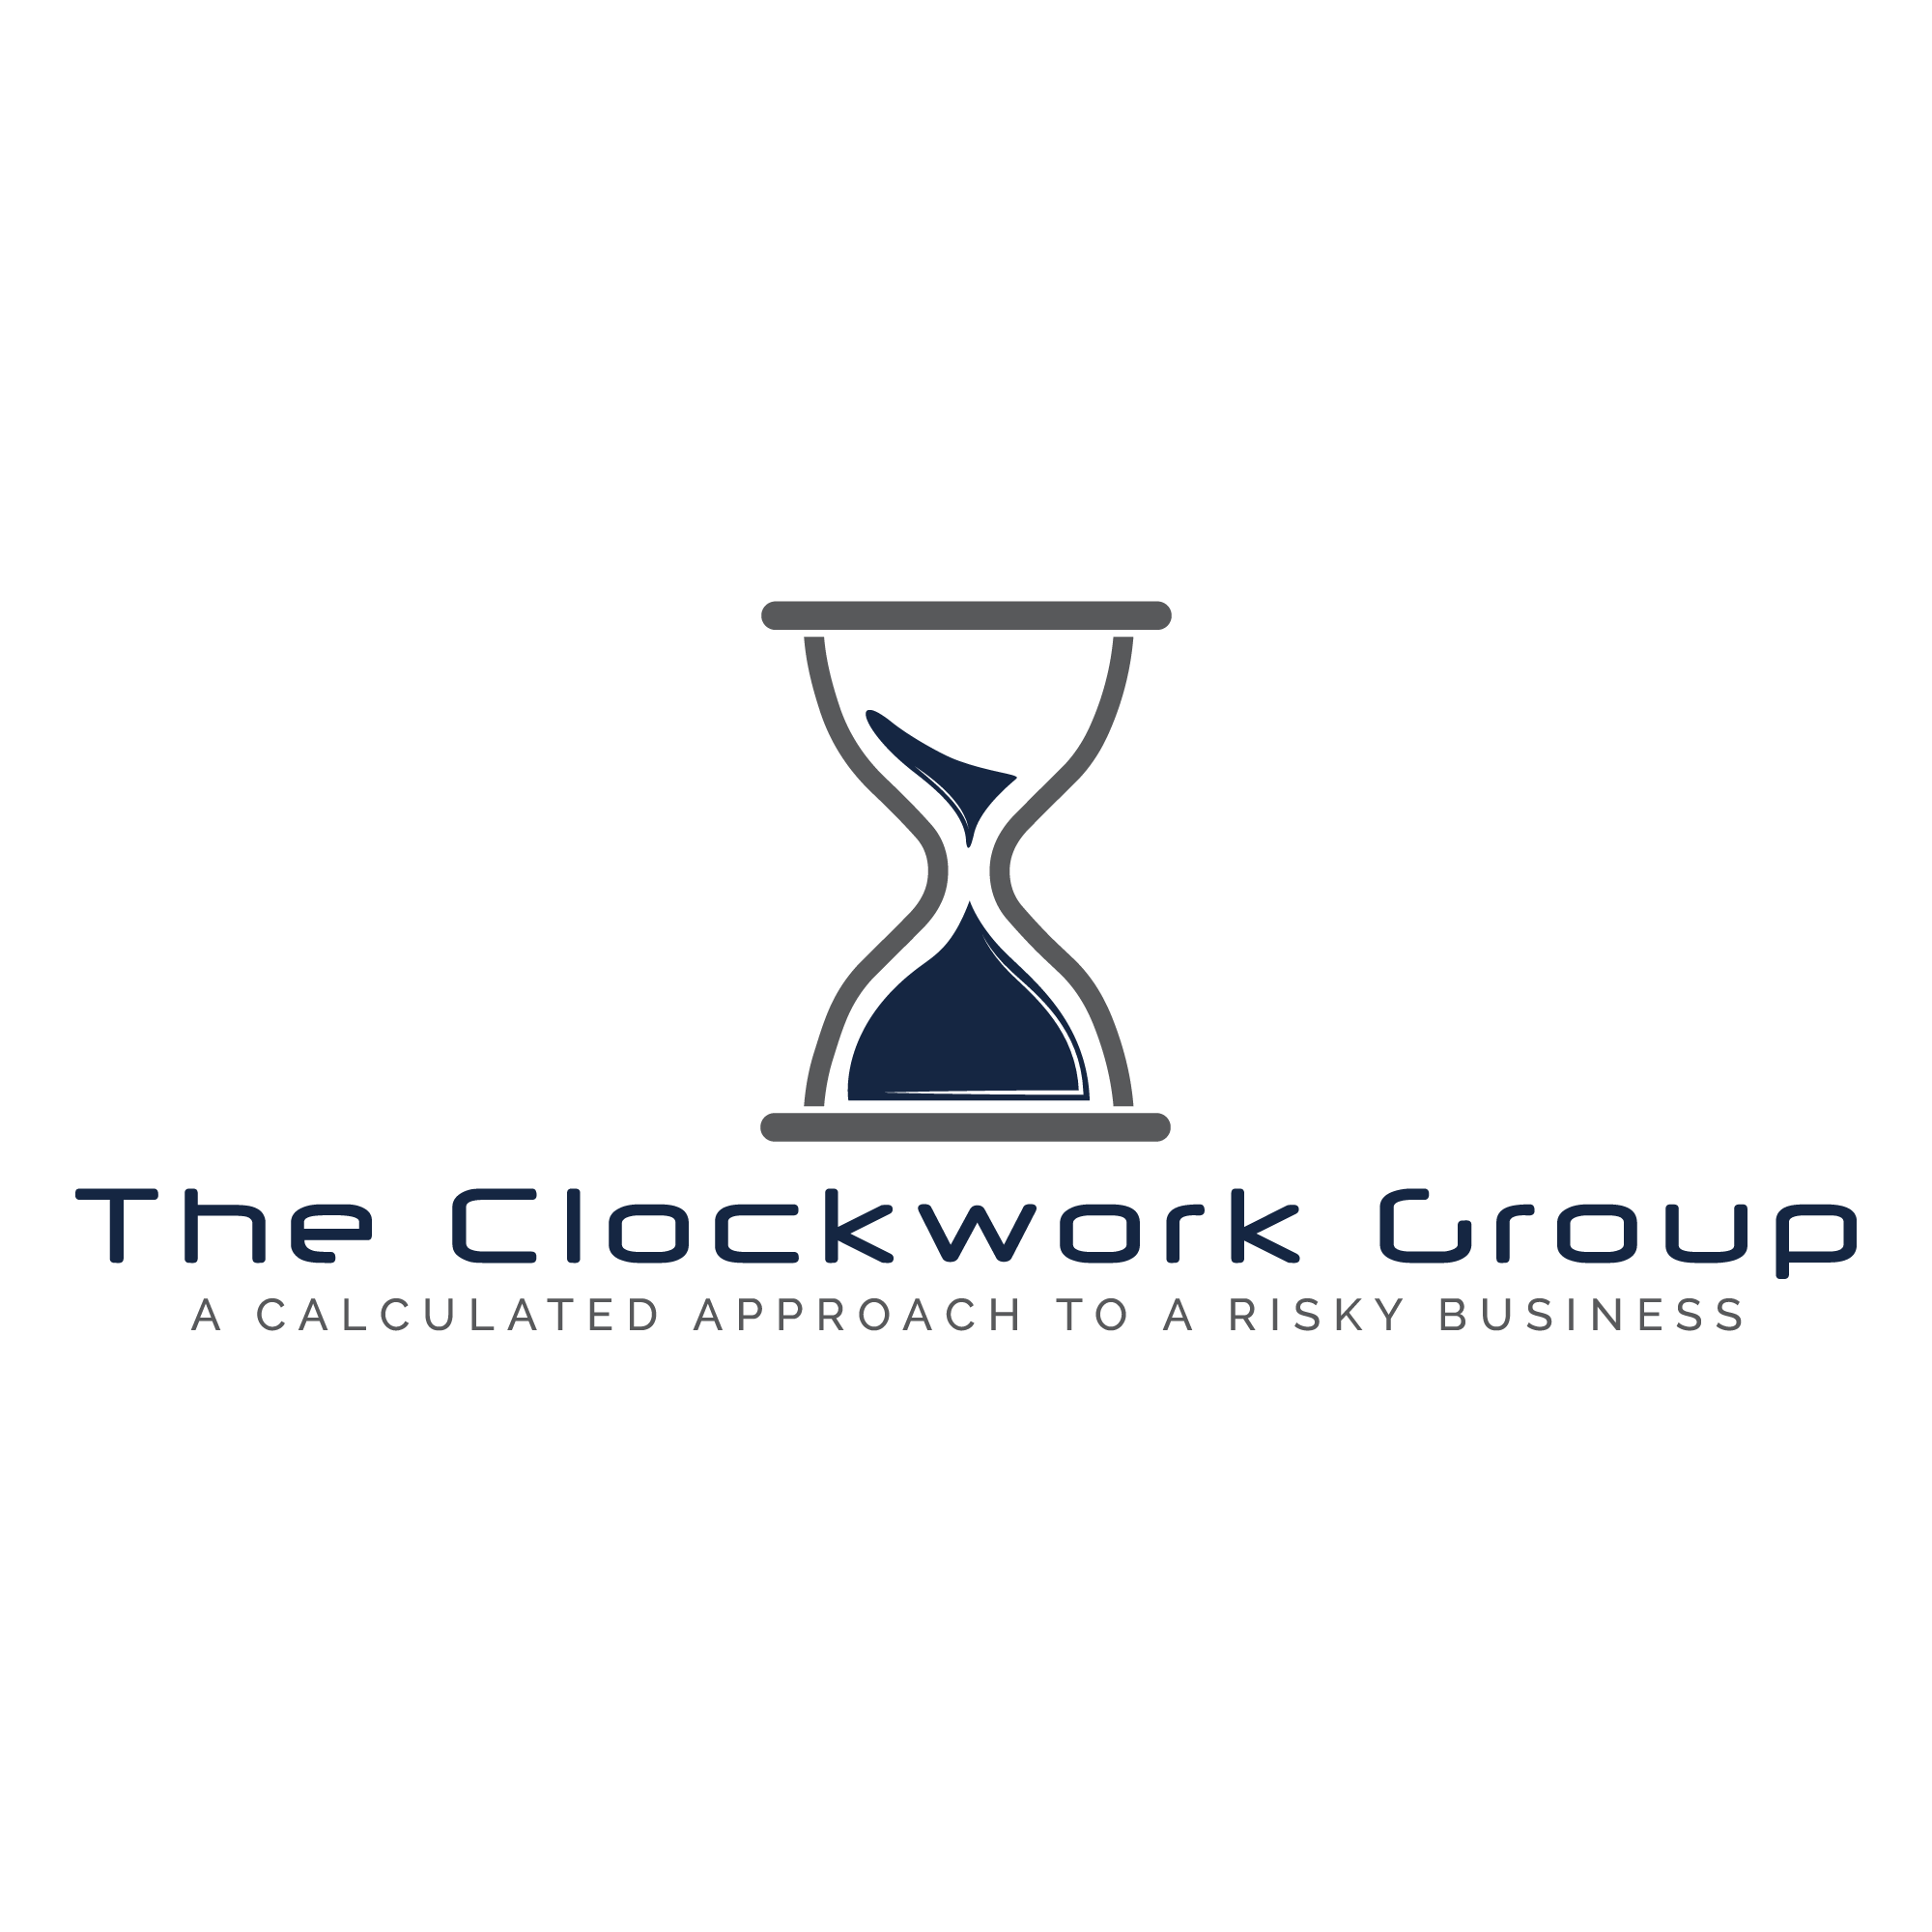 The Clockwork Group logo